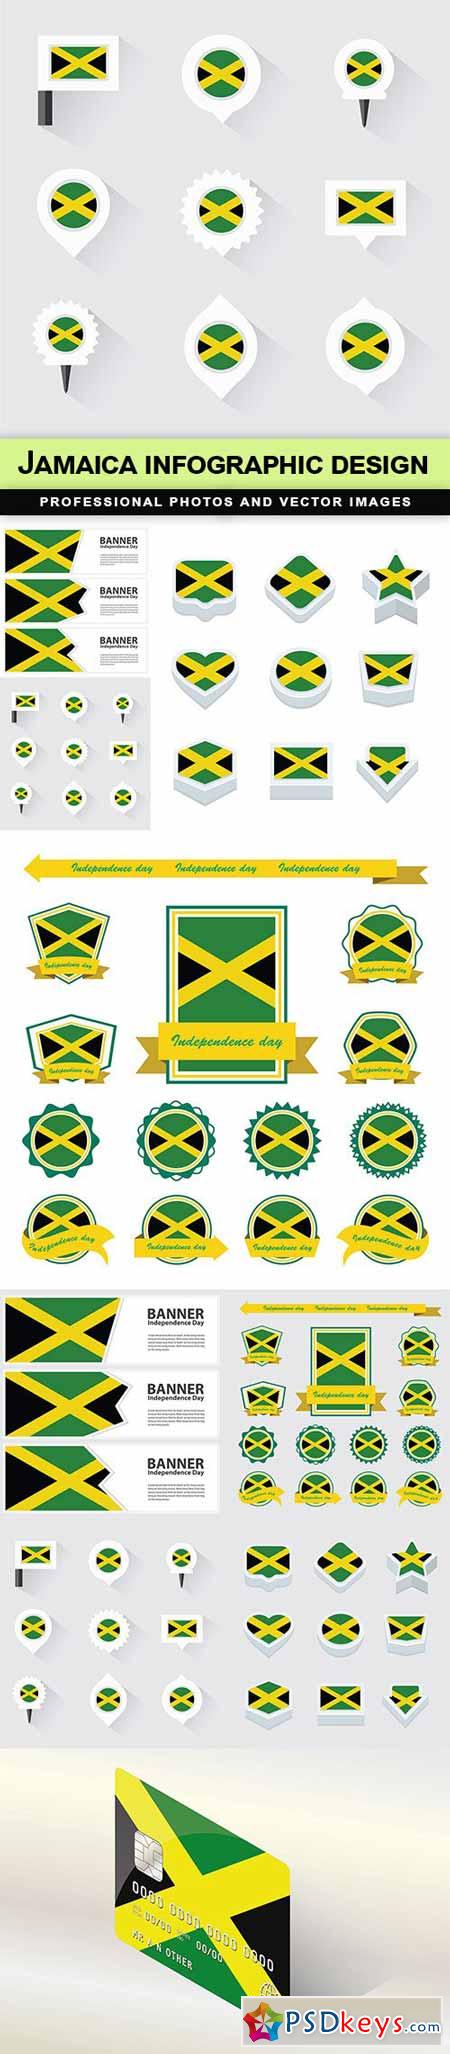 Jamaica infographic design - 6 EPS